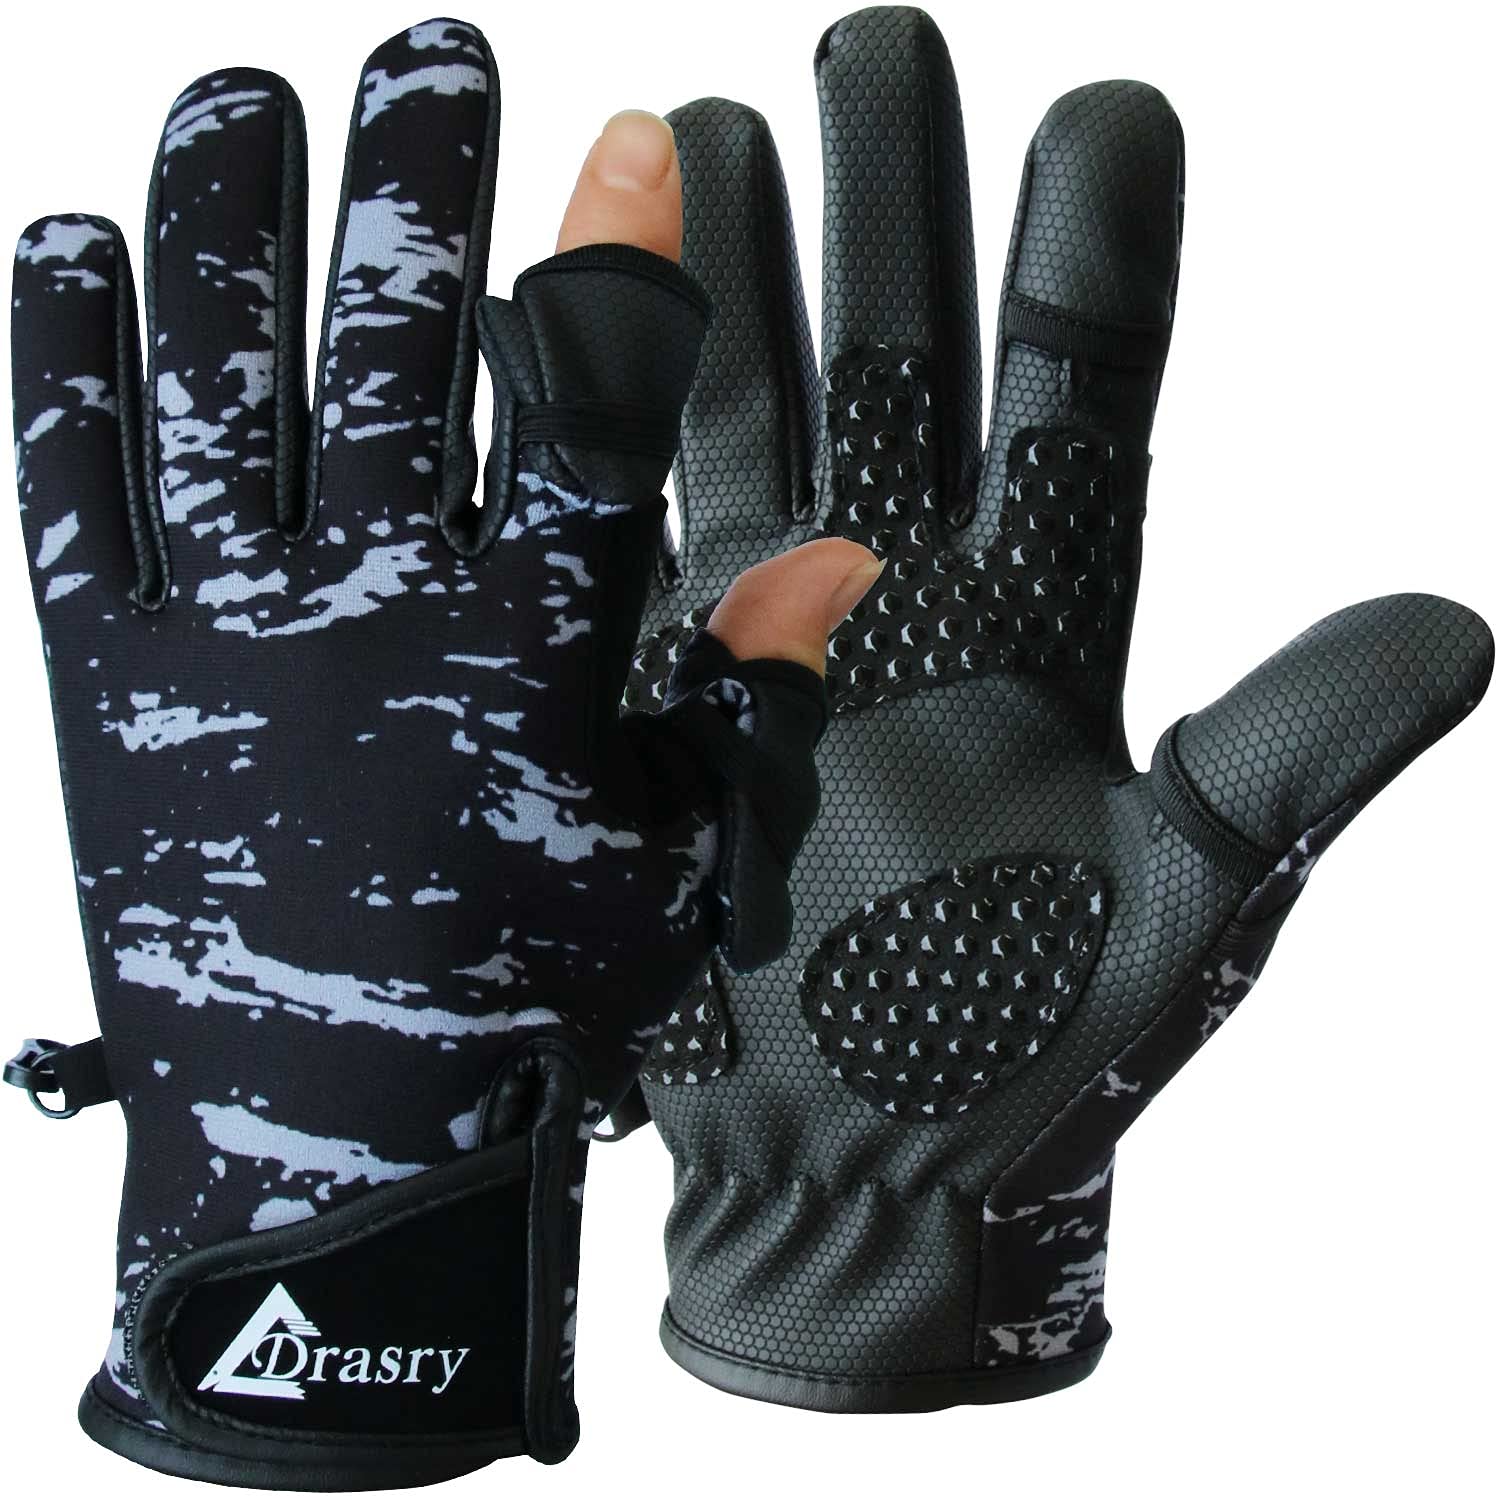 Drasry Touchscreen Fishing Gloves Two-Finger Cut Suitable for 46 to 86  Neoprene Reinforced Non-Slip